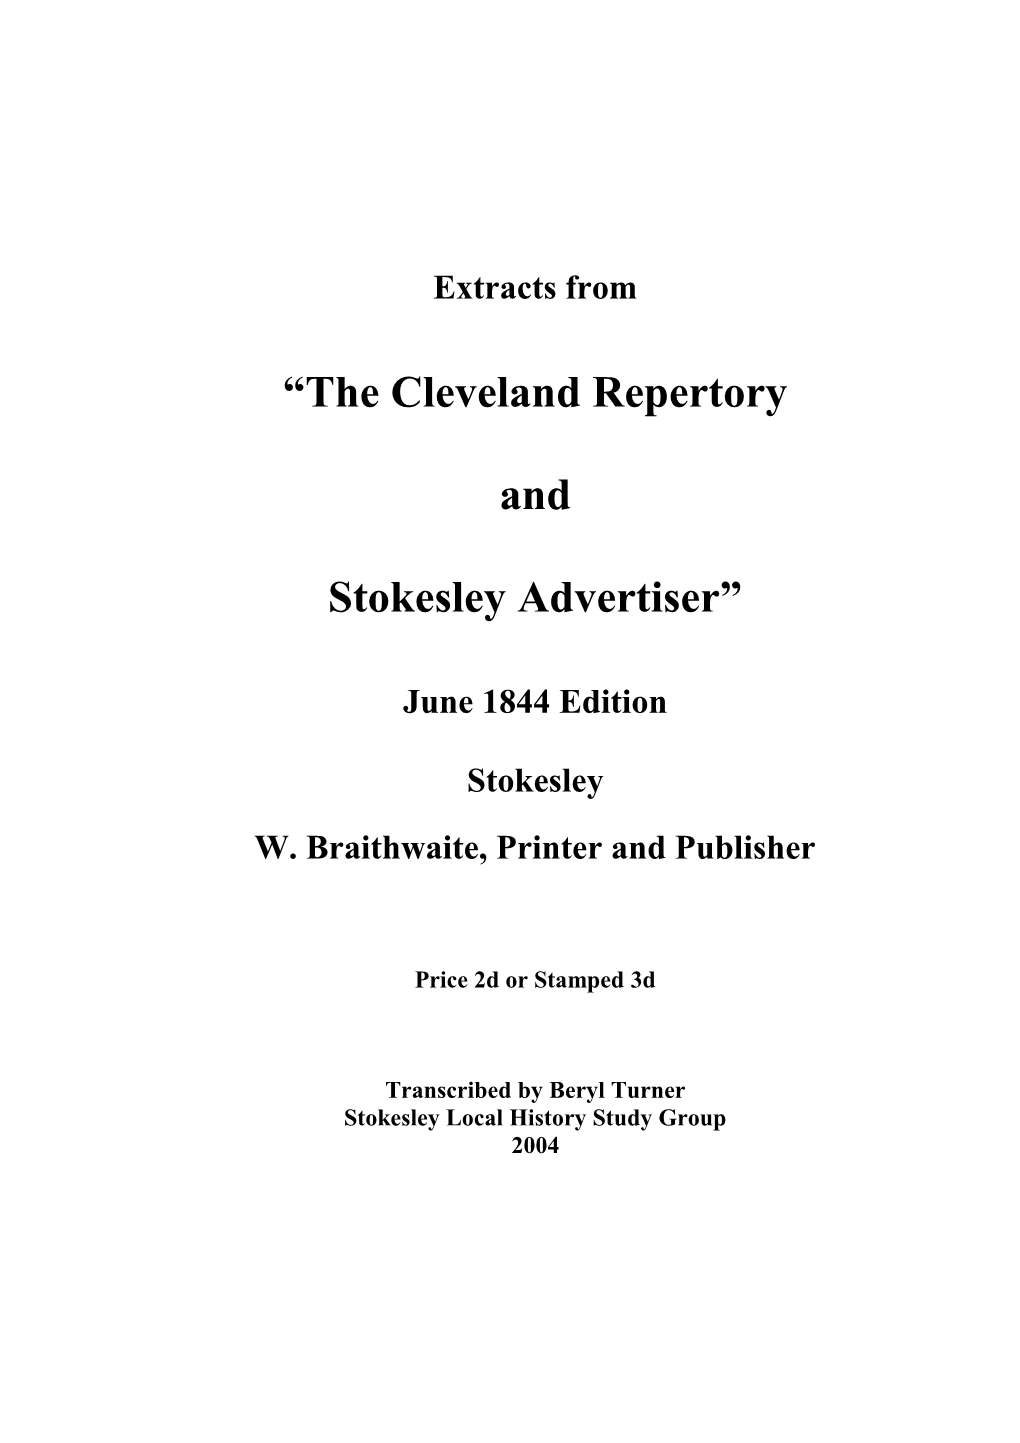 Cleveland Repertory & Stokesley Advertiser Jun 1844